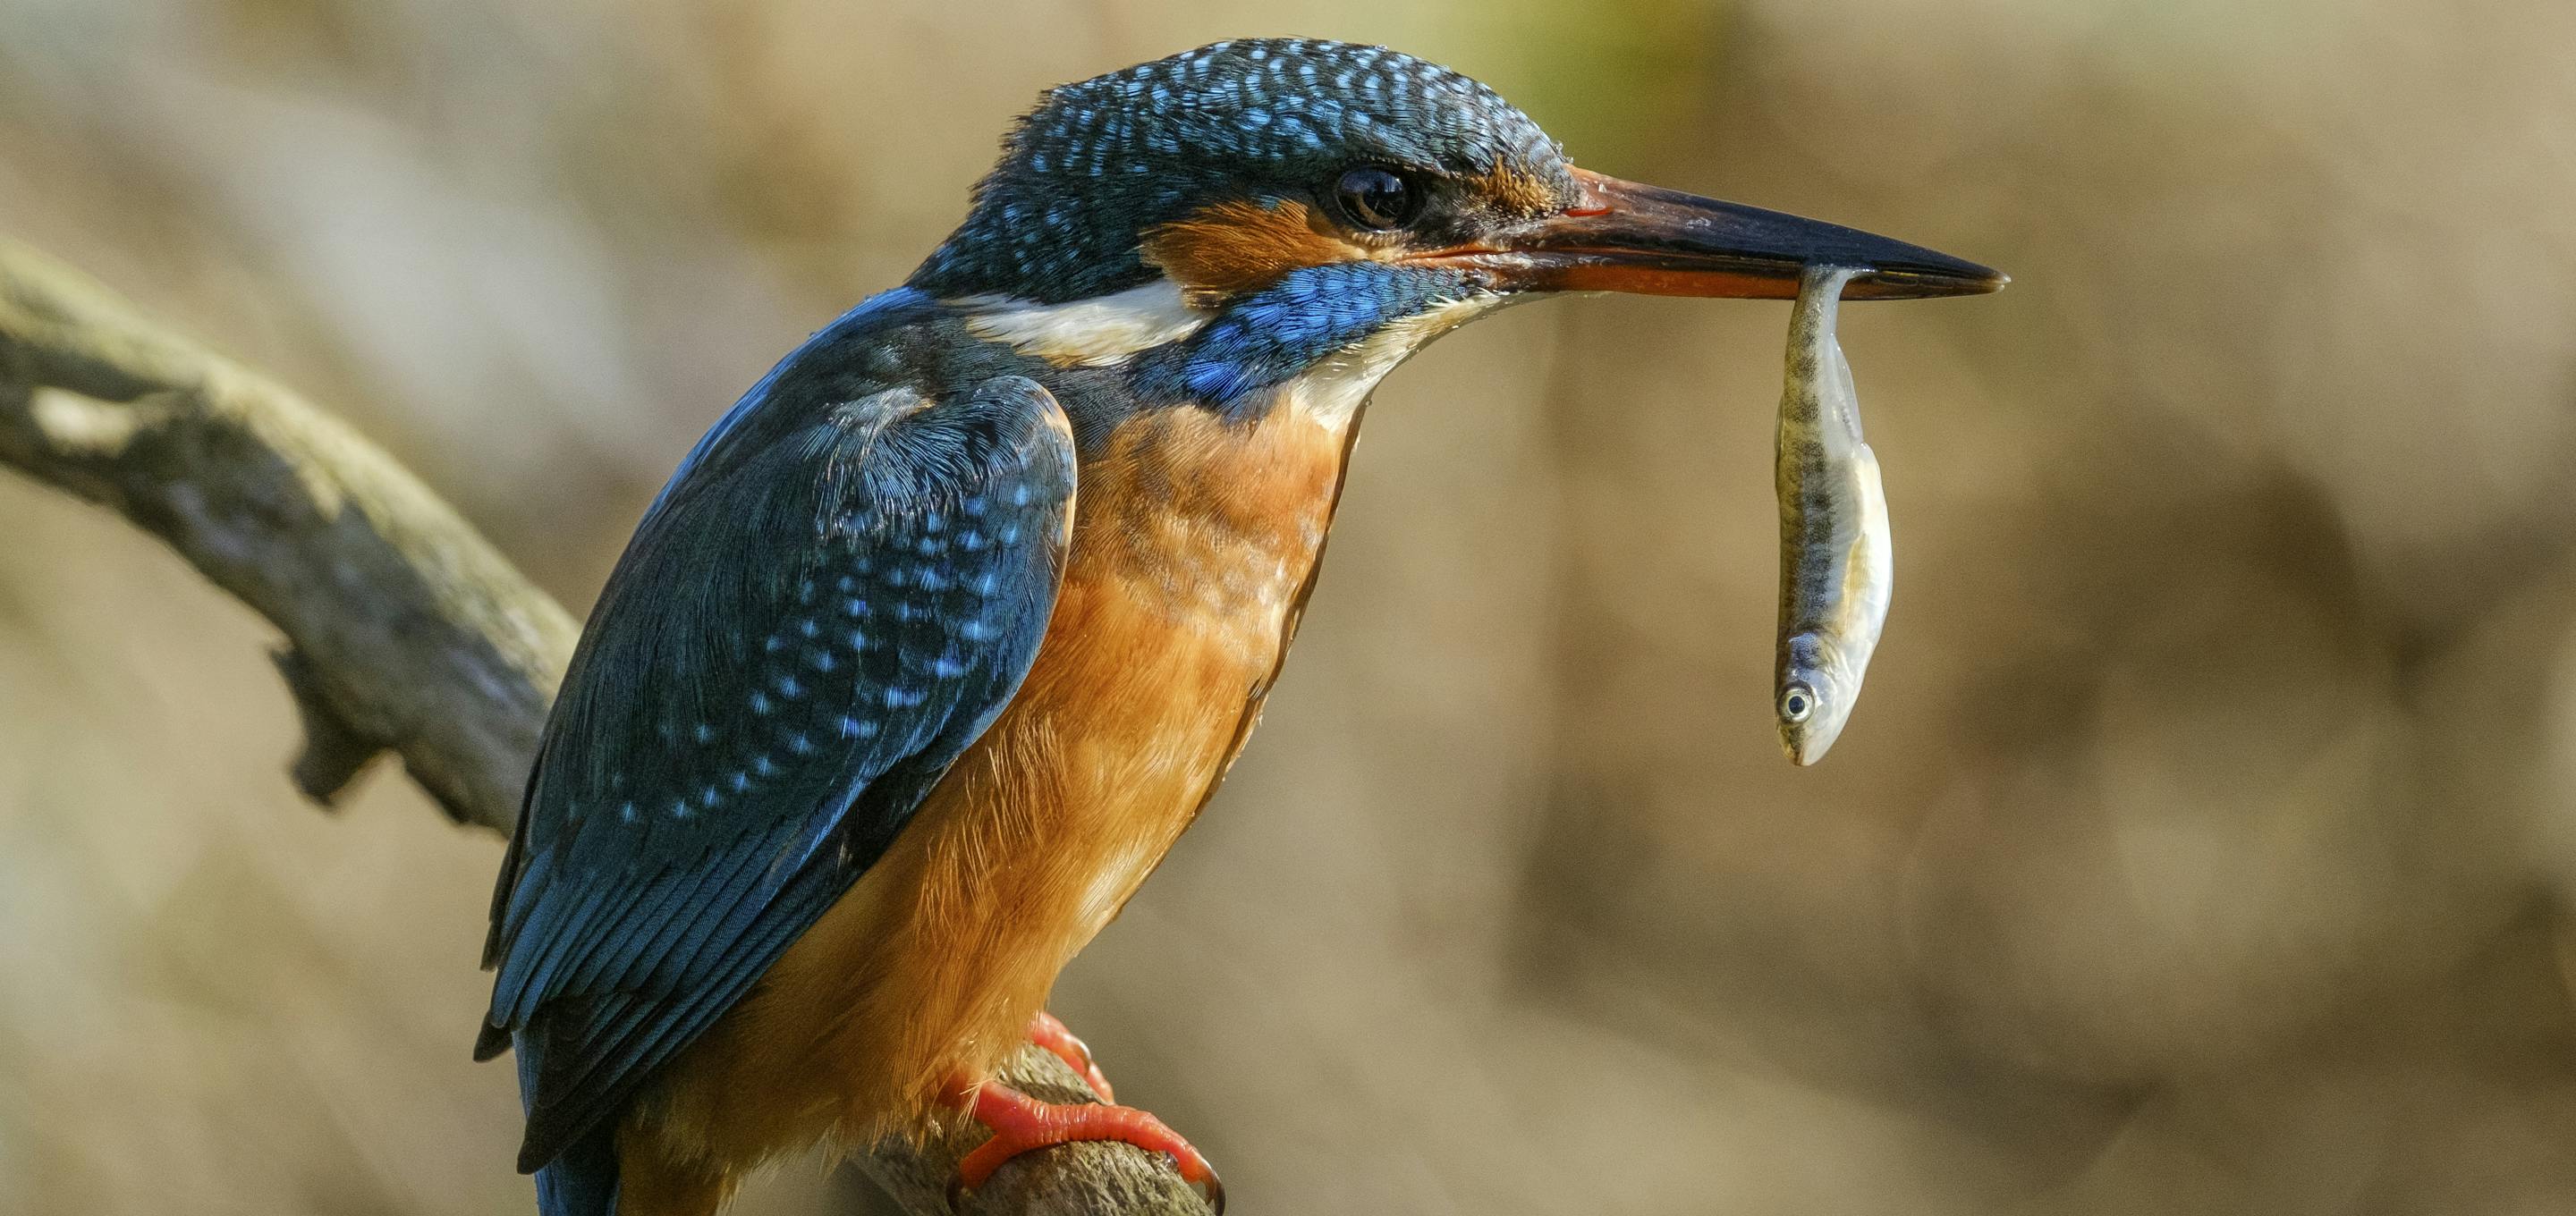 Kingfisher with fish in beak